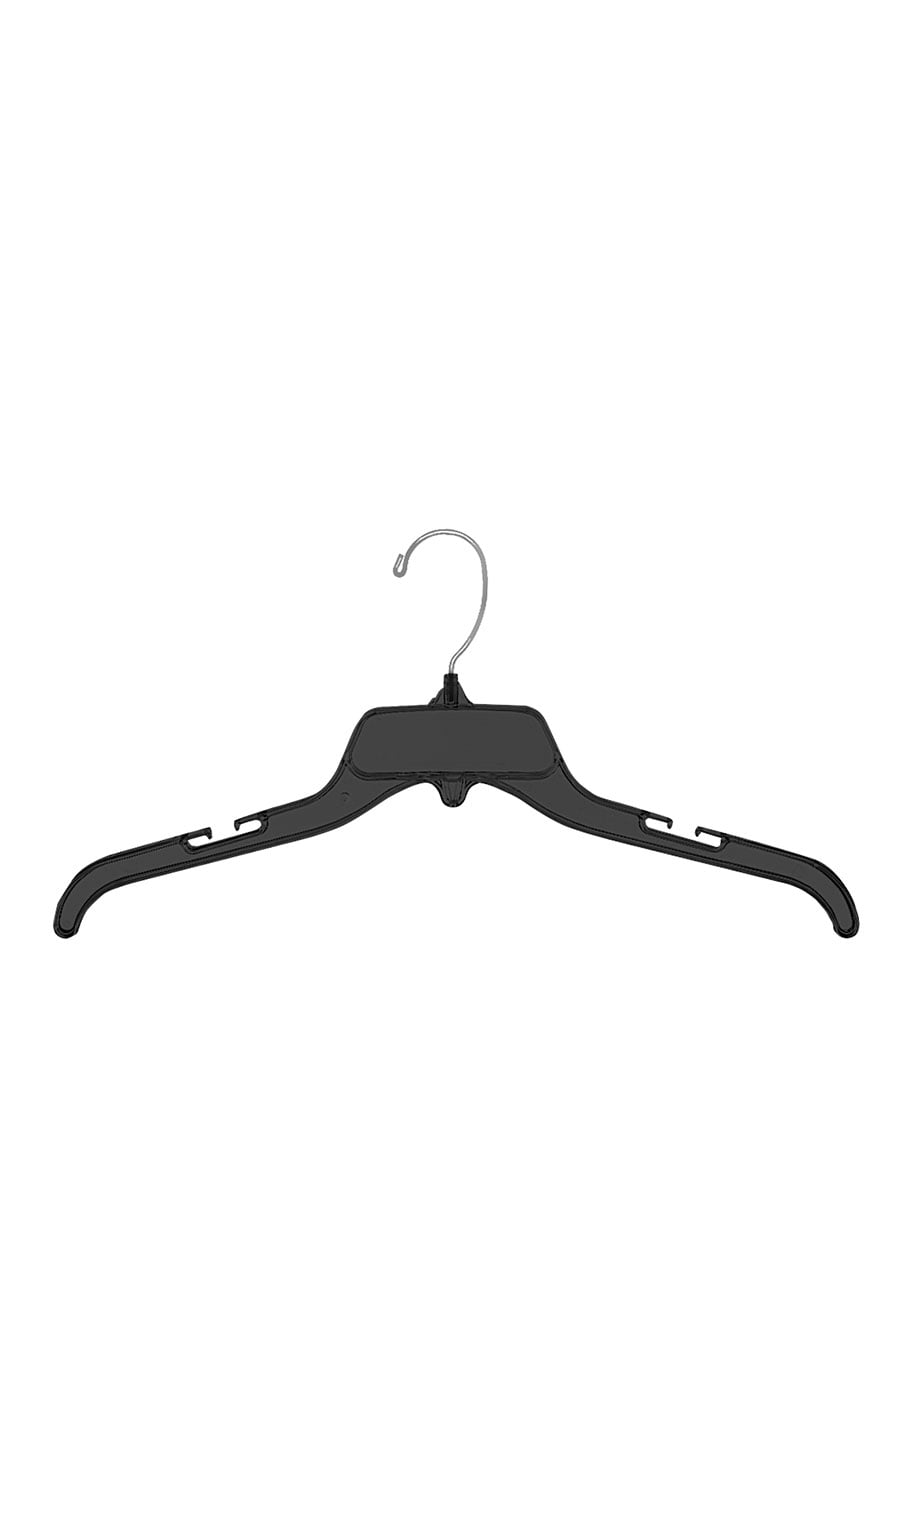 50 Black Plastic Hangers Adult Clothing Clothes Garment Dress Retail Hanger 17" 